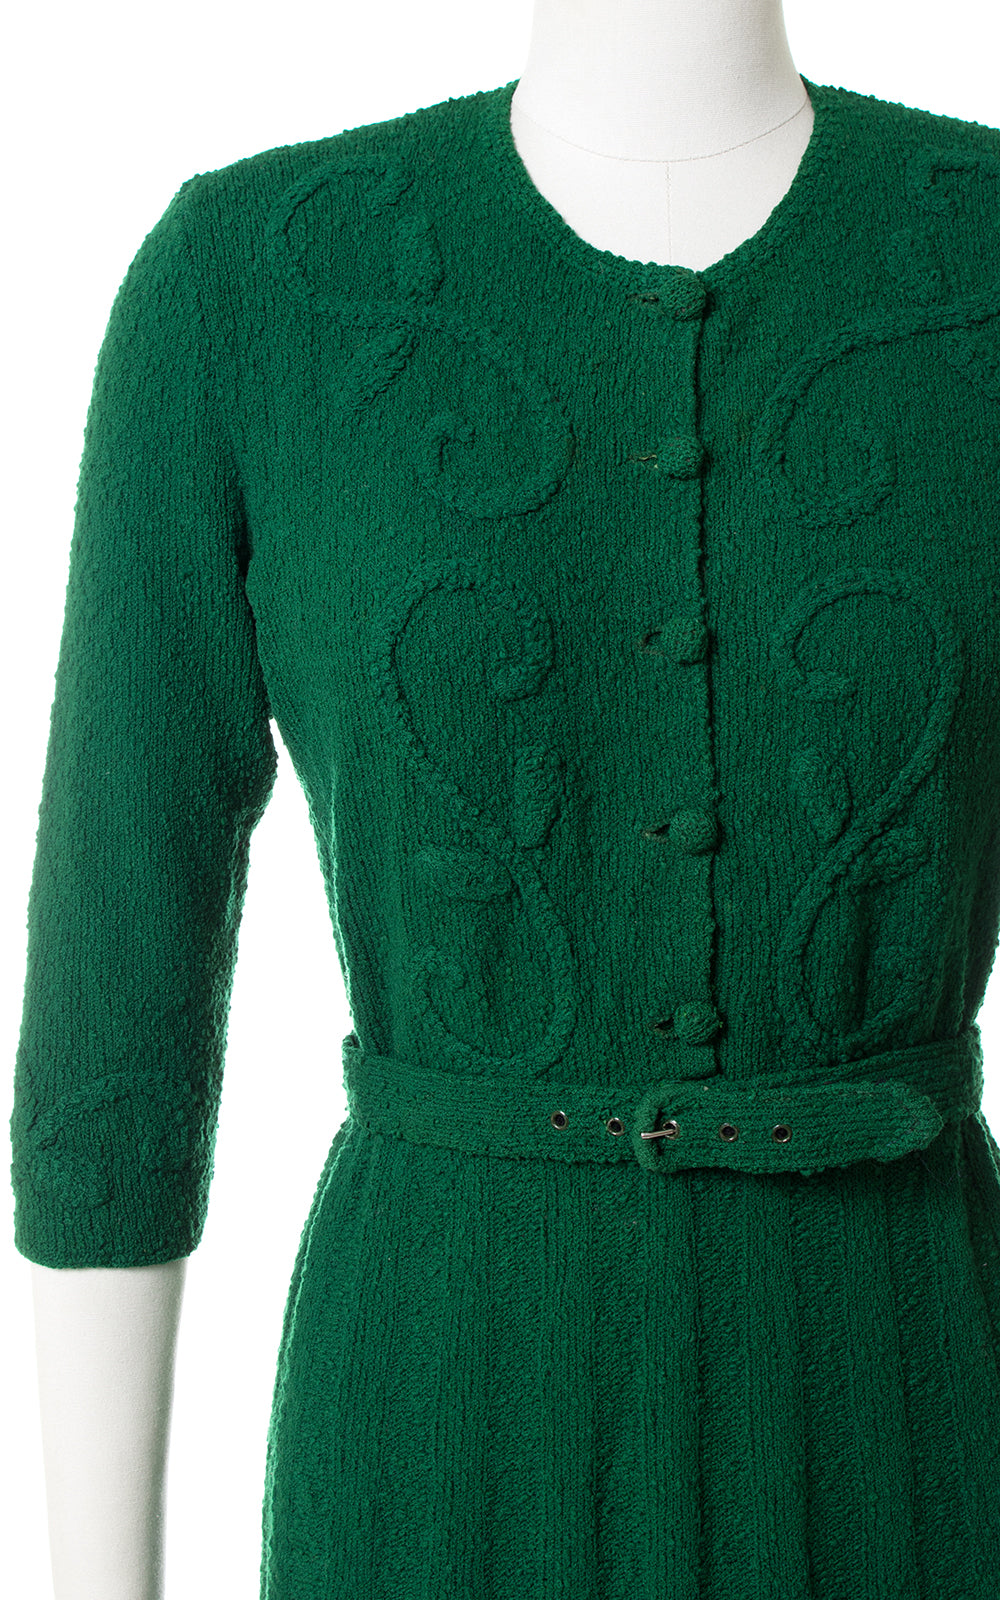 1940s Forest Green Knit Wool Dress